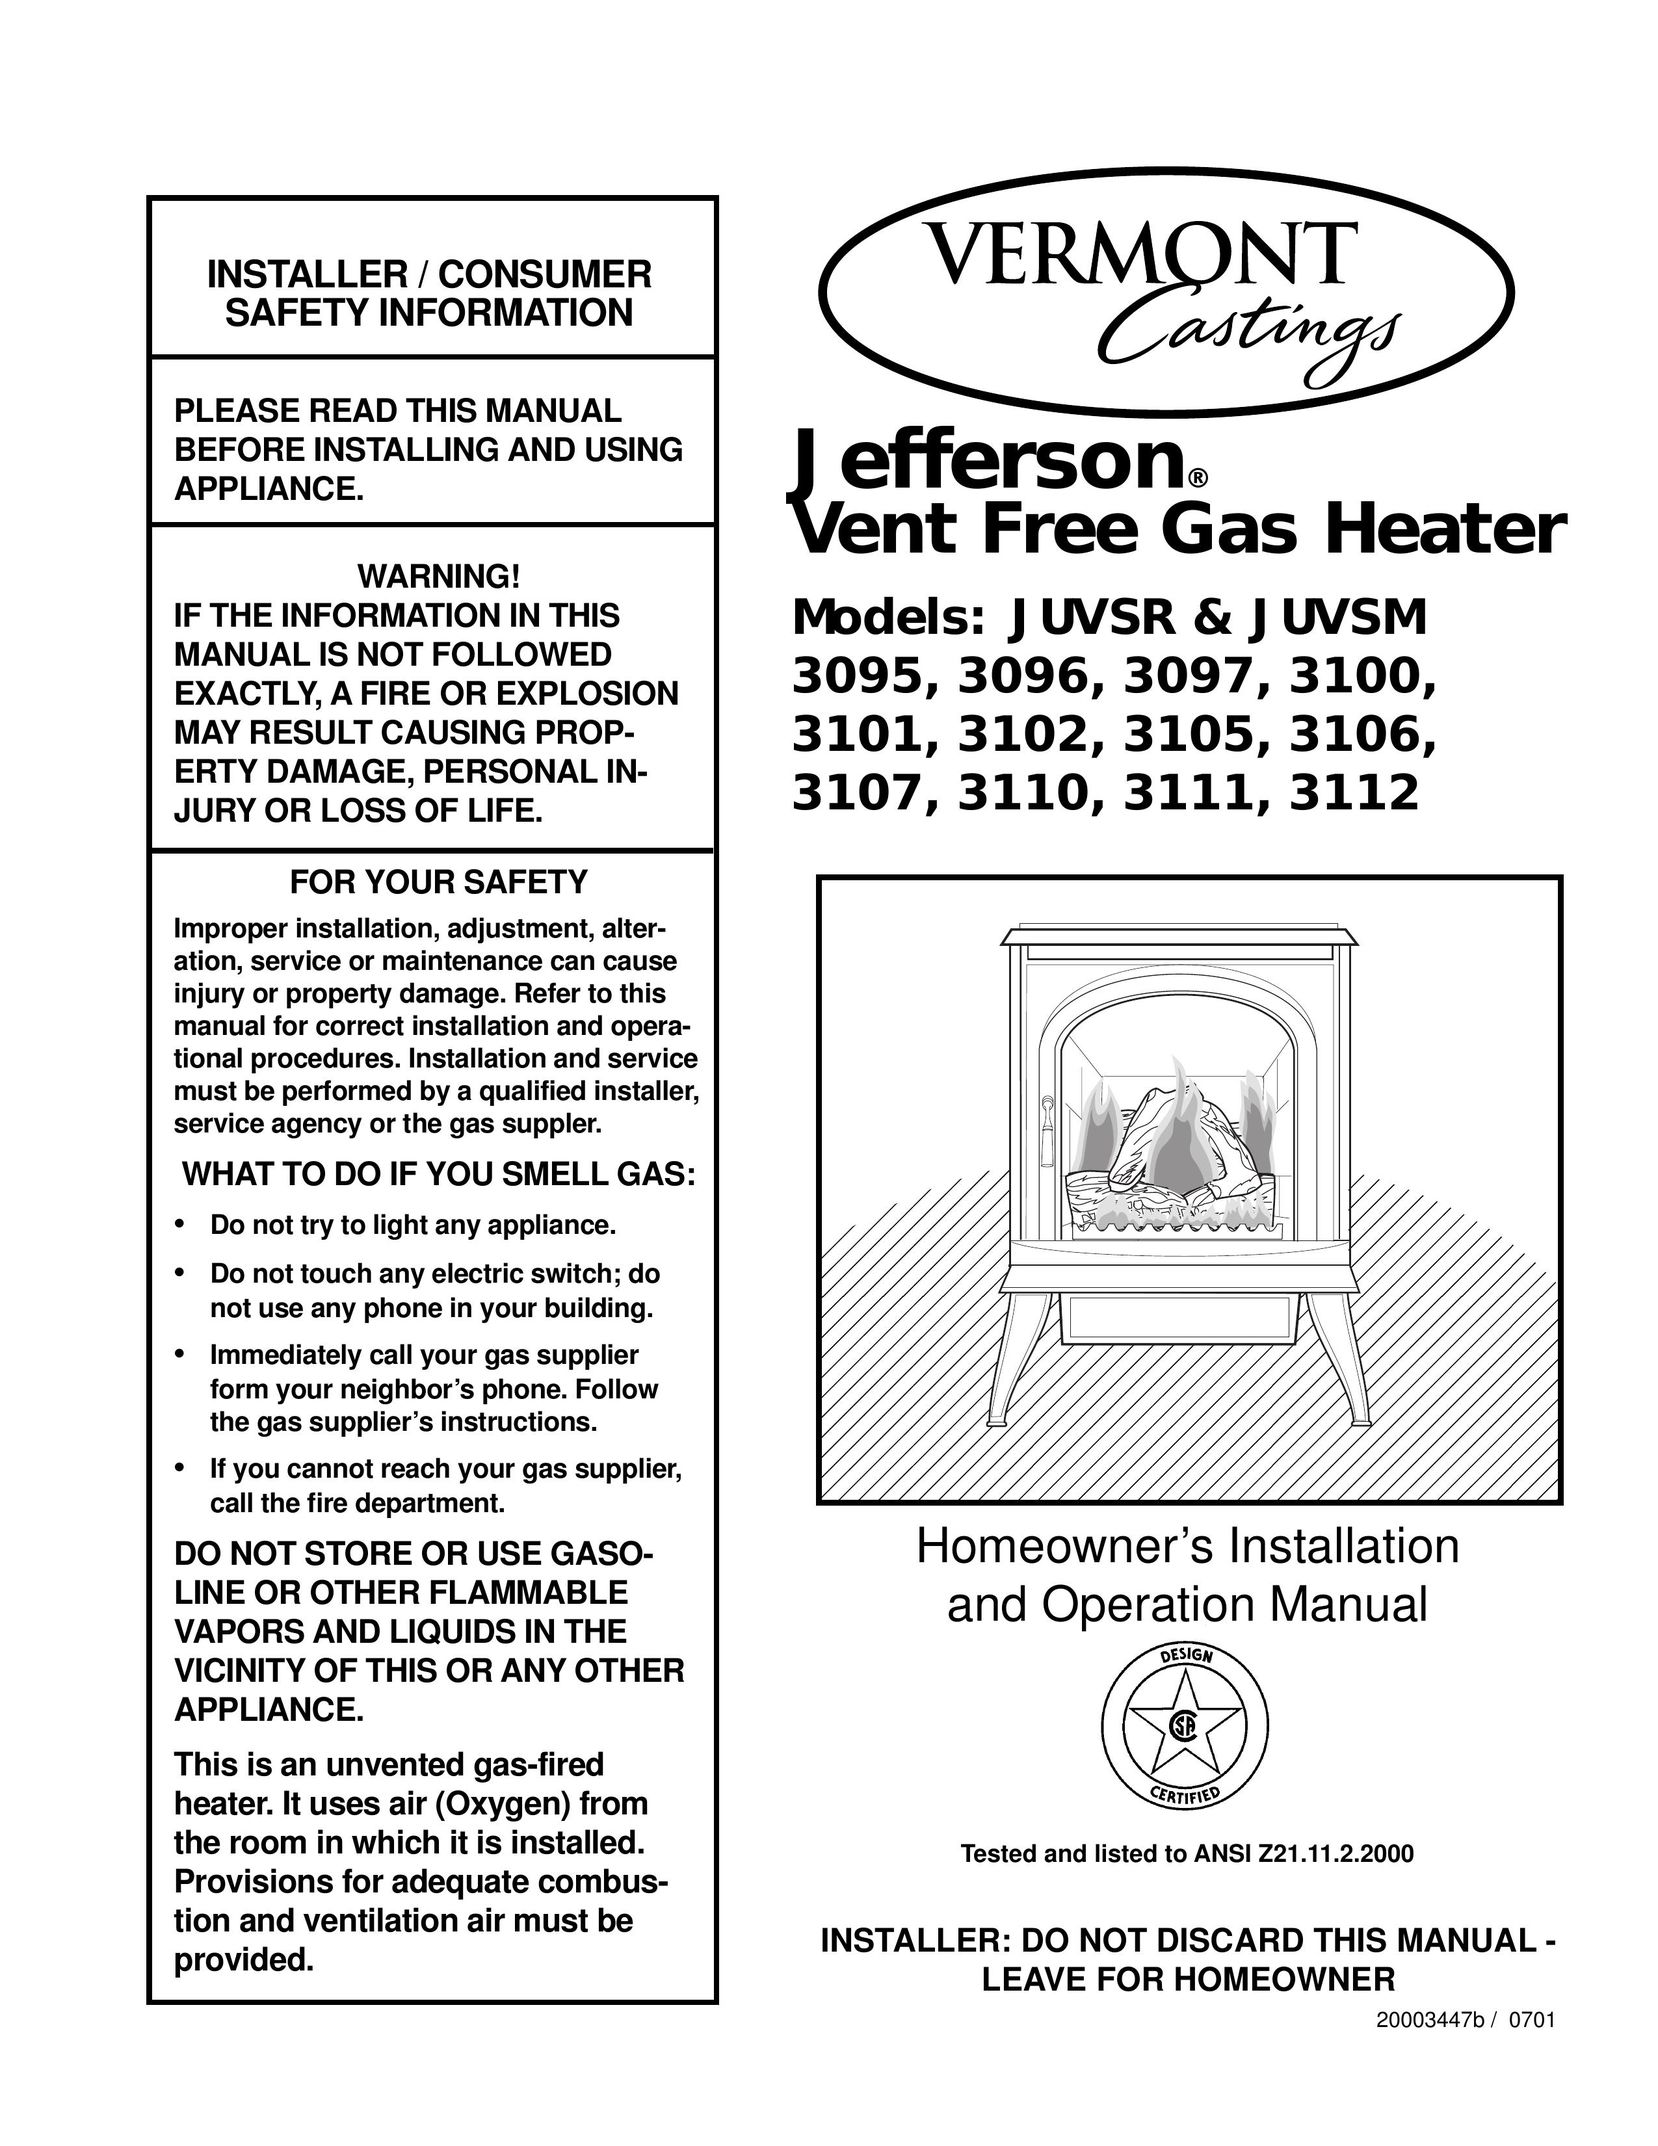 Majestic Appliances 3112 Electric Heater User Manual